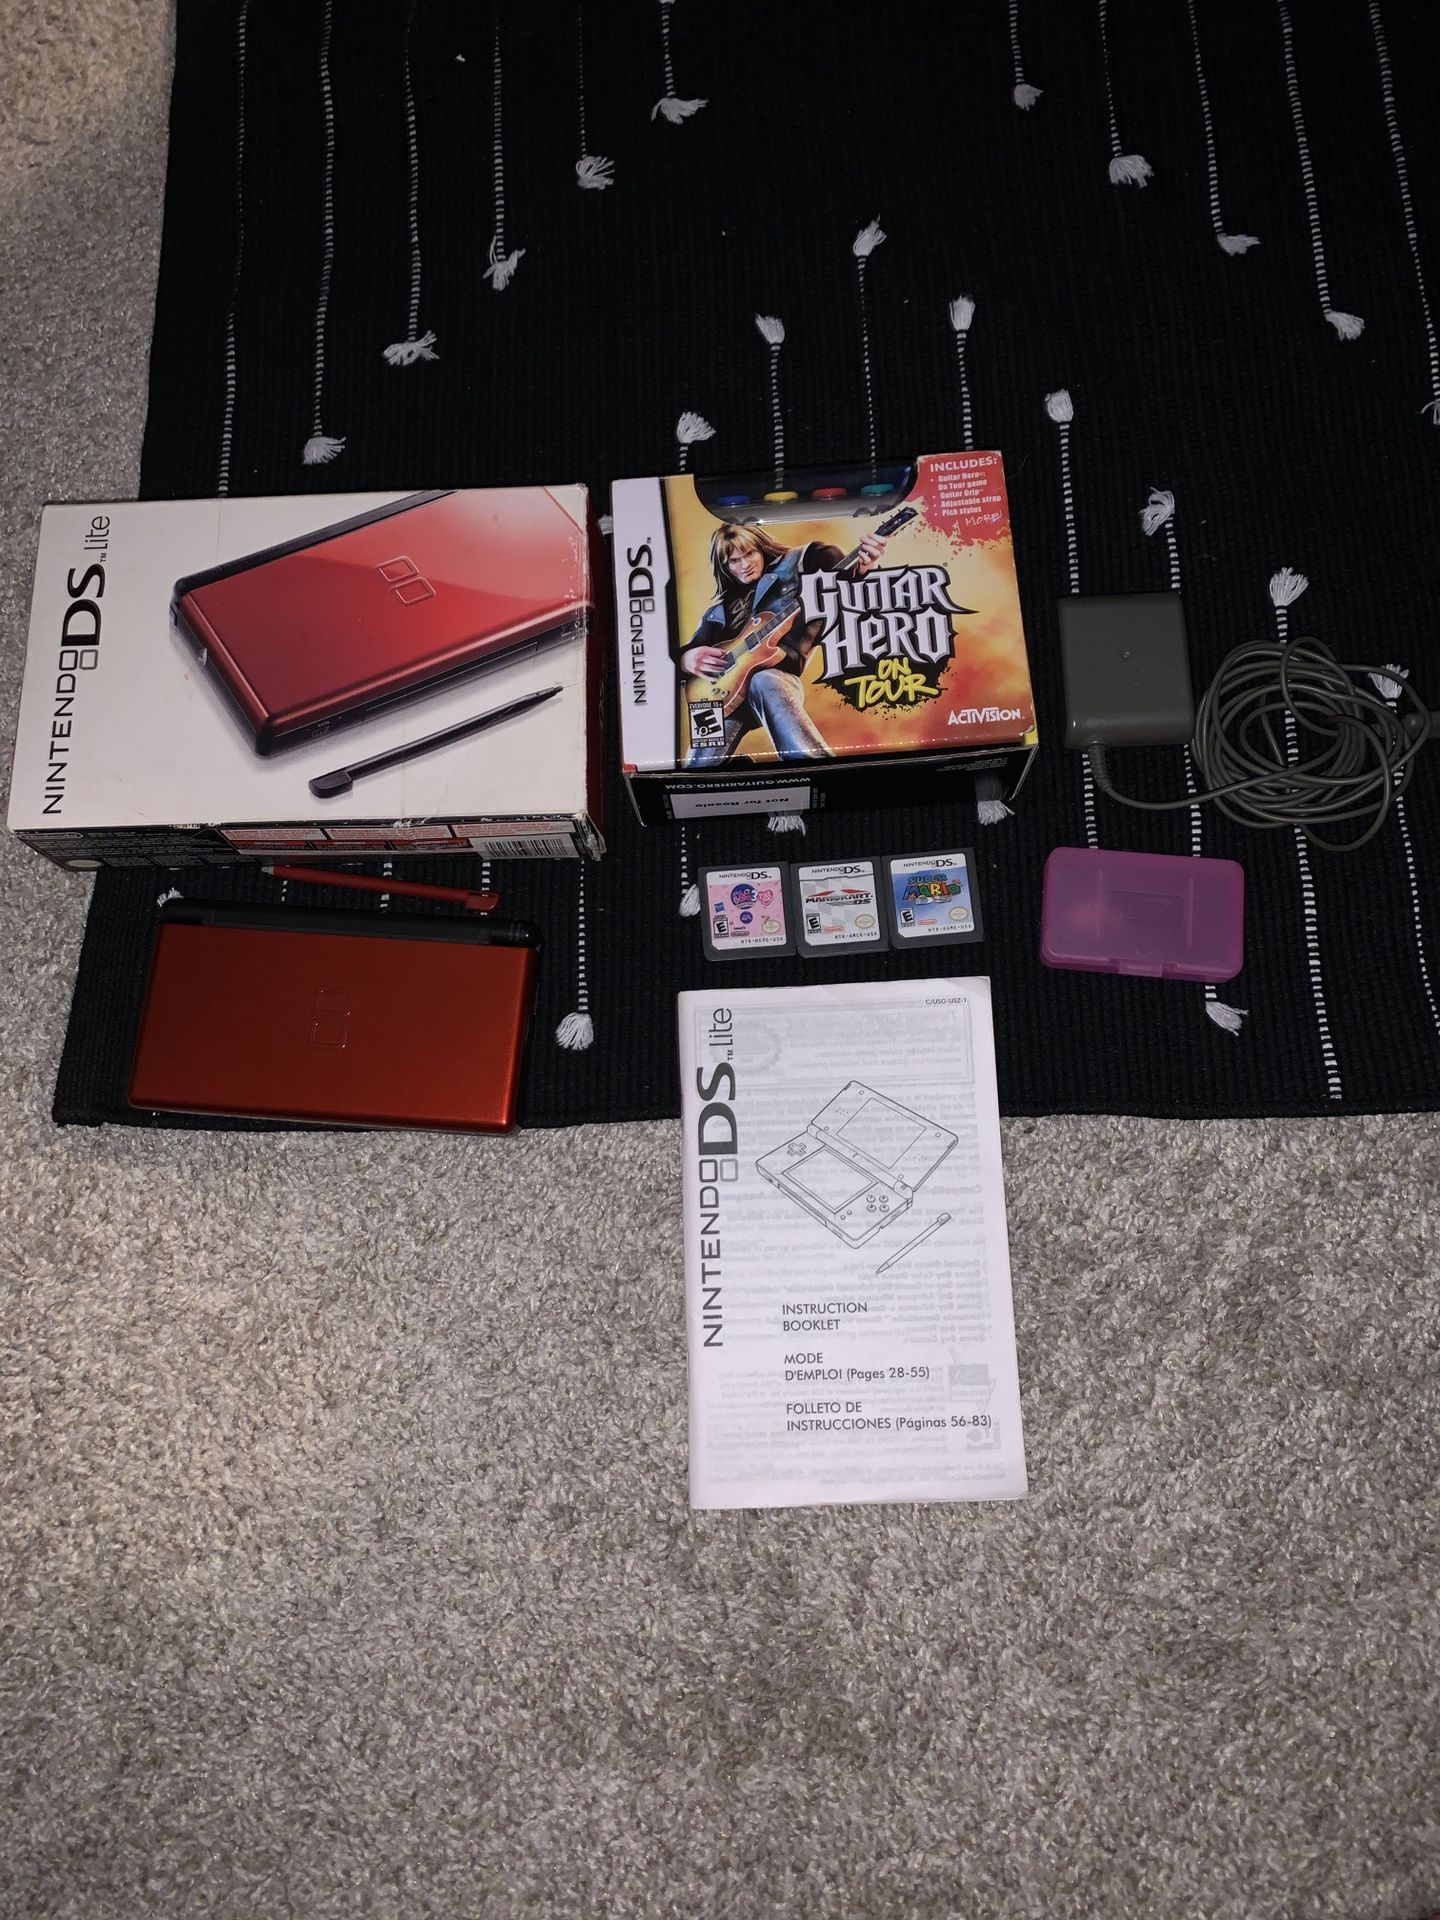 Nintendo DS Lite Crimson Red Black Handheld System Box, Manual, & 4 Games Tested